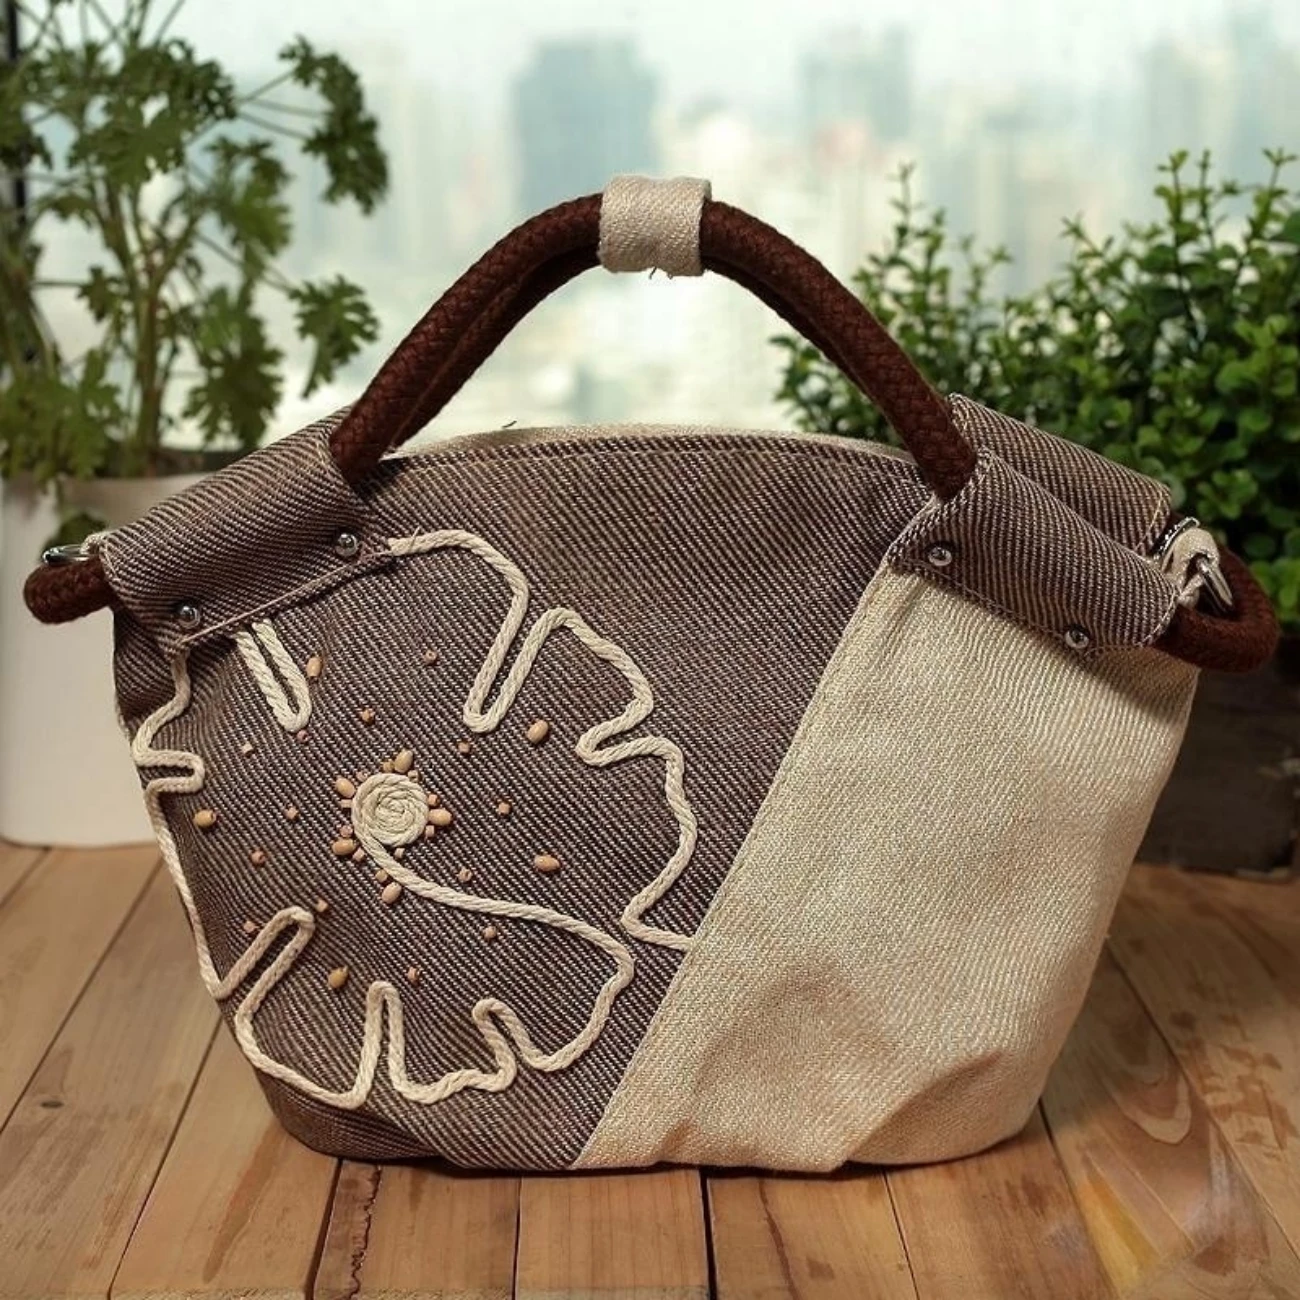 Women's shopping bag diagonal cross bag embroidered handbag